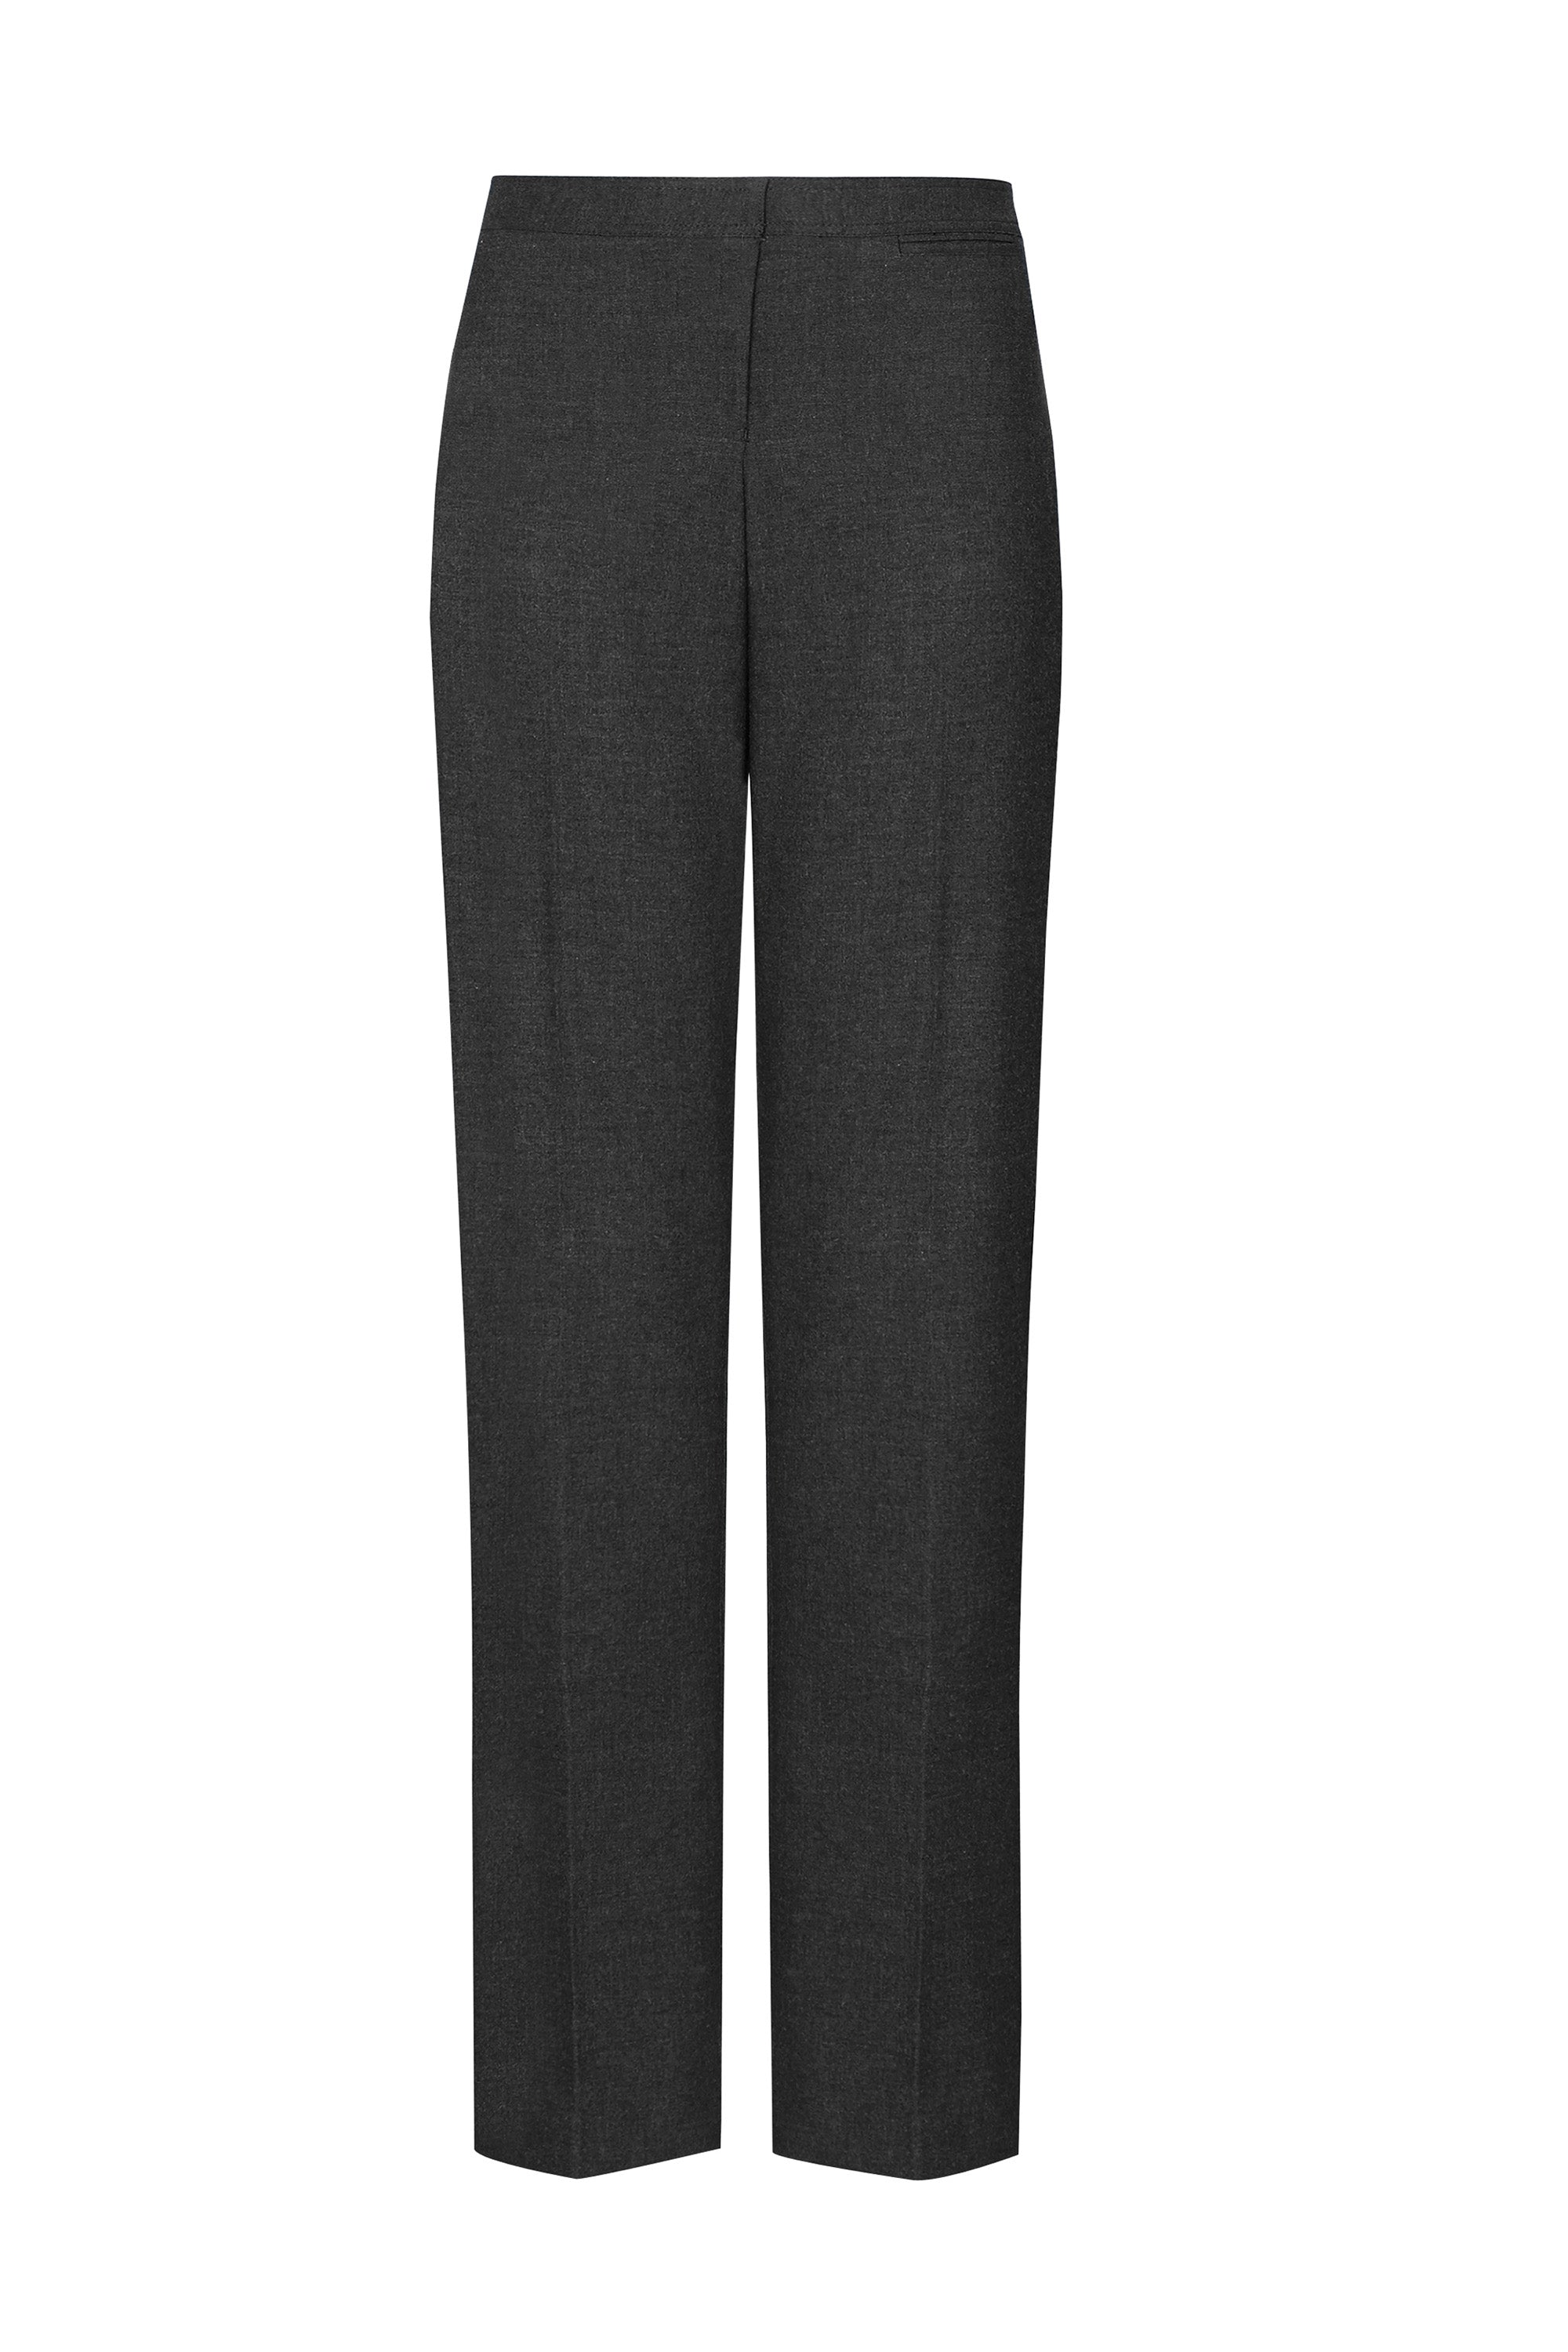 Senior Girls Black Zip Pocket Skinny Trouser | Sale & Offers | George at  ASDA